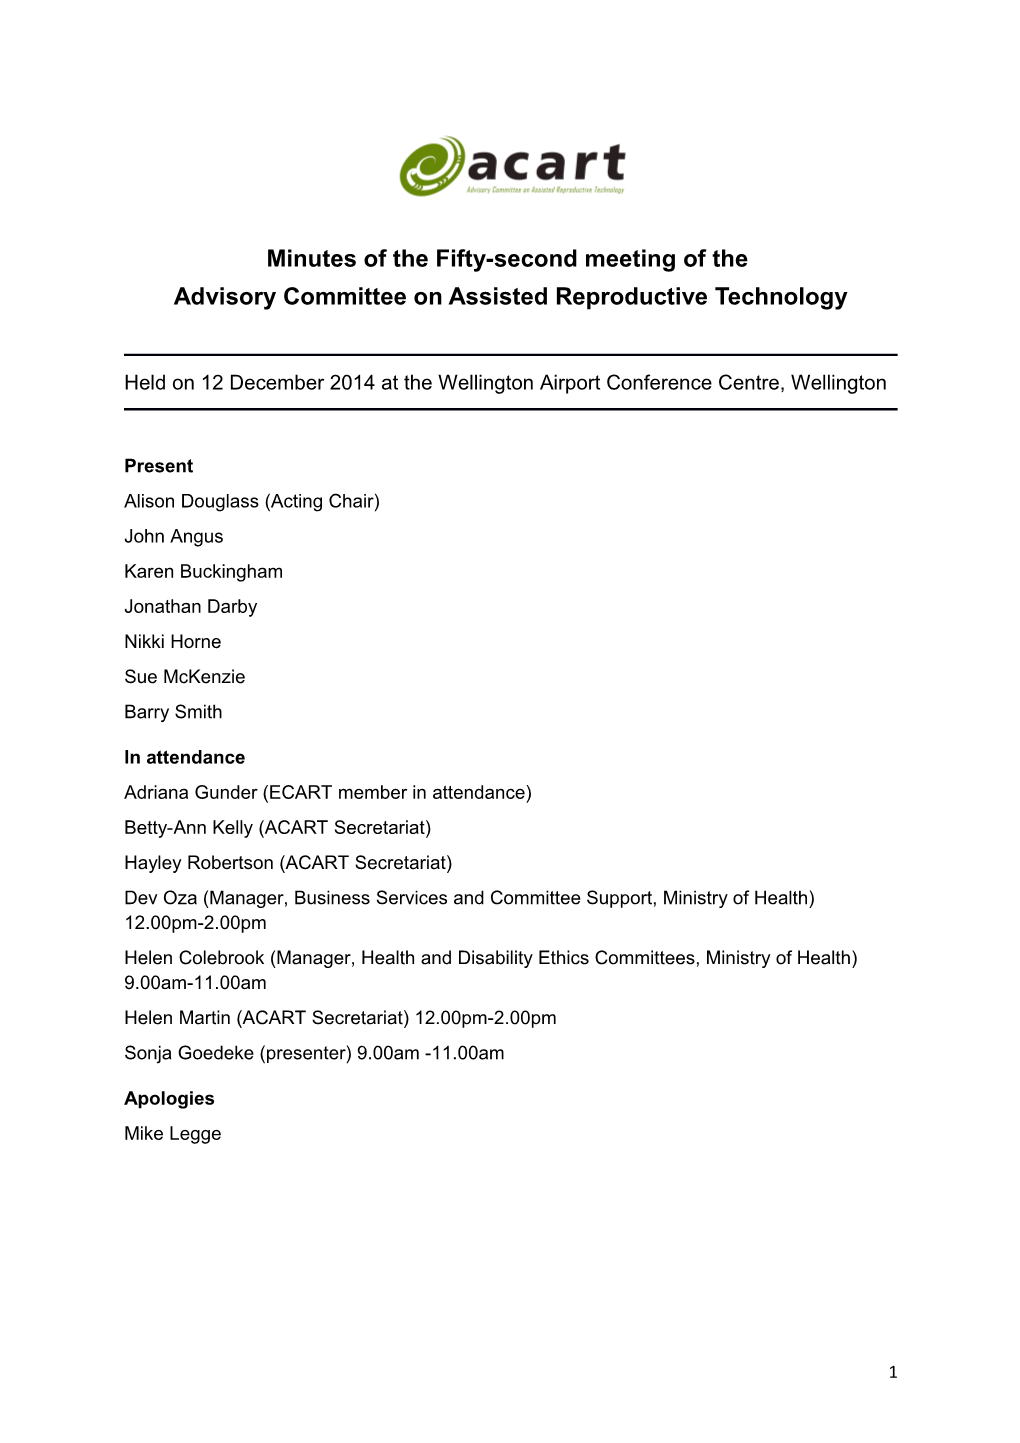 ACART Minutes 52Nd Meeting - 12 Dec 2014